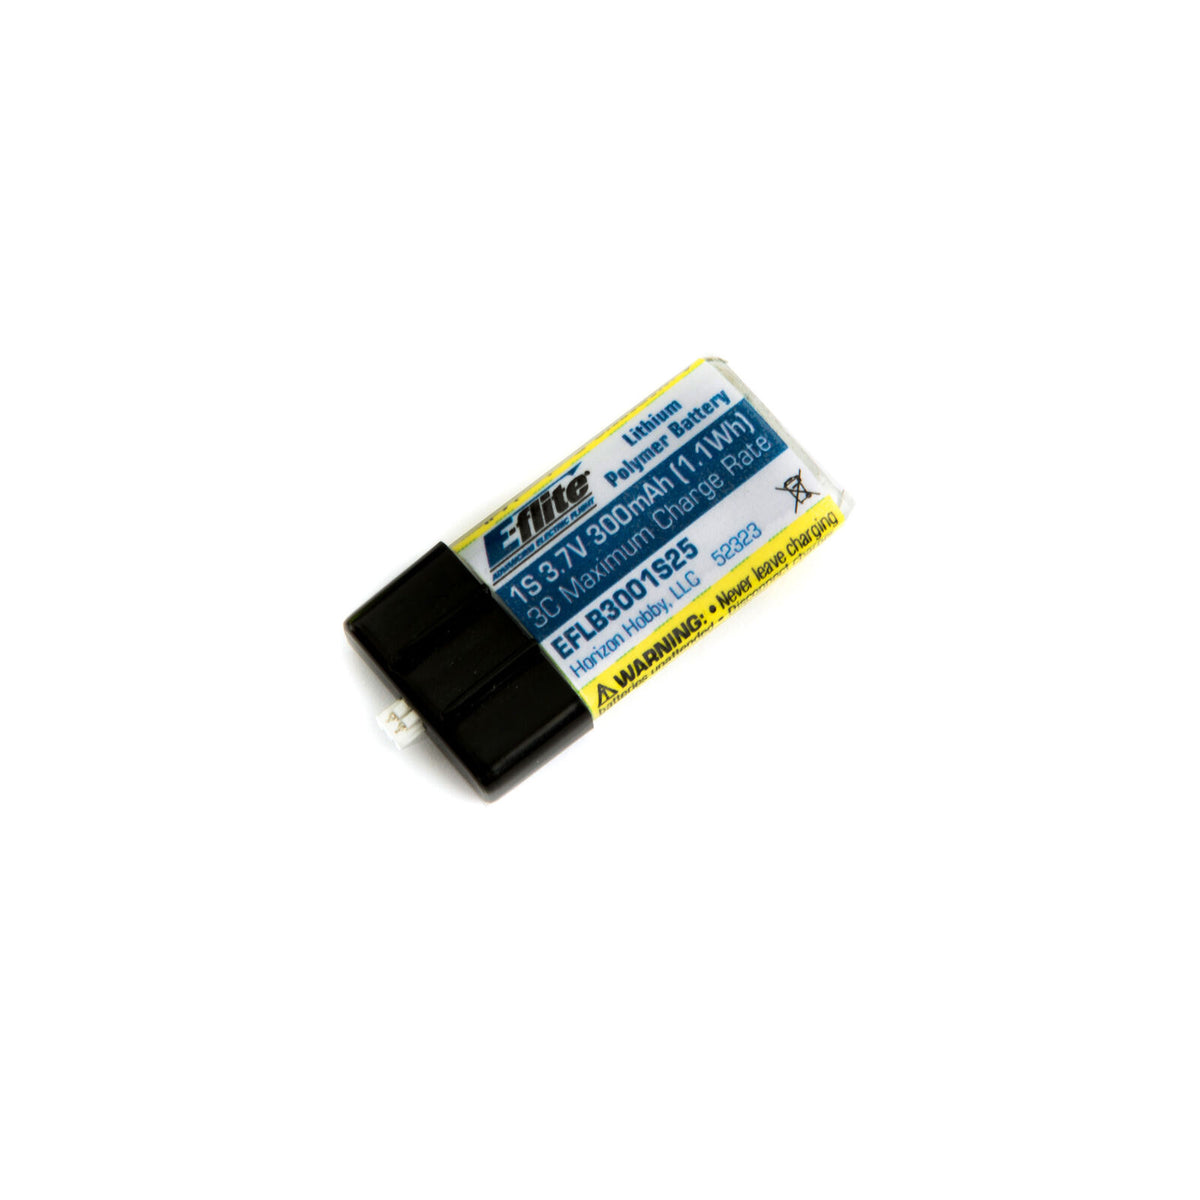 E-flite 300mAh 1S 3.7V 25C LiPo Battery: PH 1.5 (Ultra Micro) (EFLB3001S25)